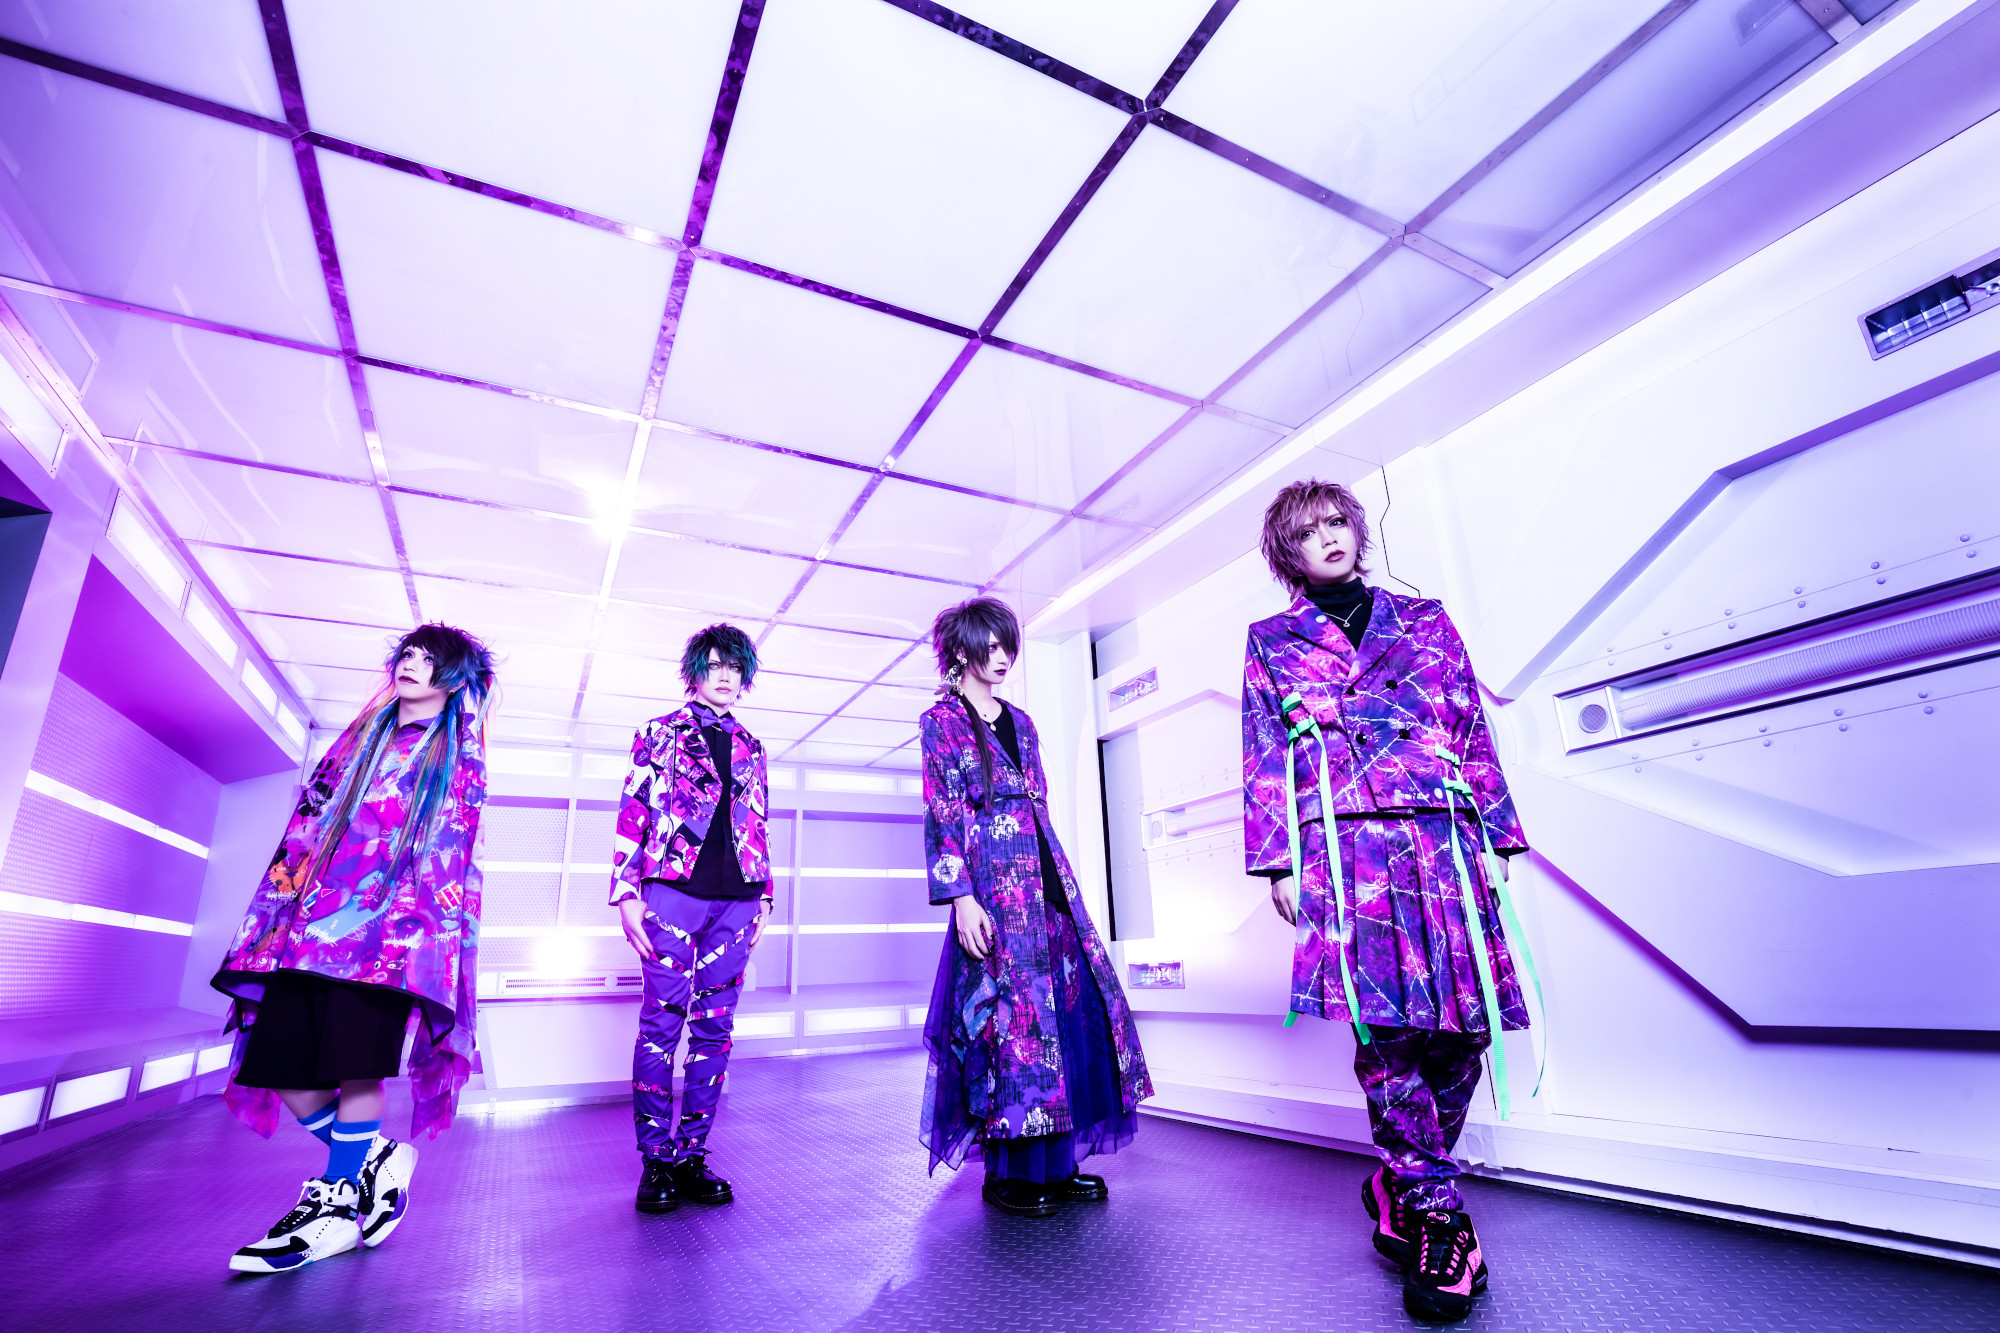 POIDOL new live DVD: “2020.11.29 POIDOL LAST ONEMAN TOUR「Period.」 Shinjuku BLAZE”